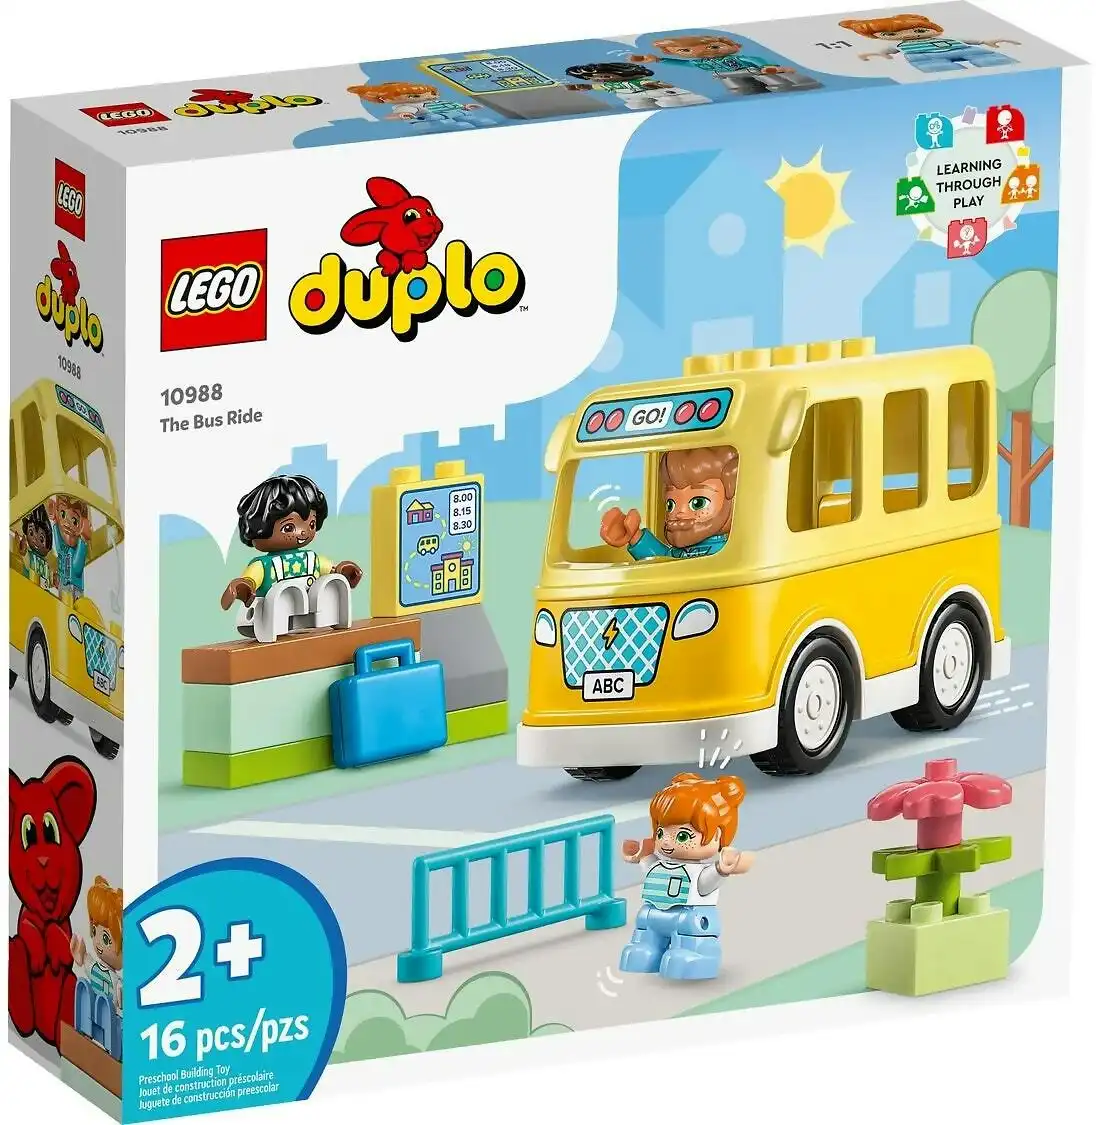 LEGO 10988 The Bus Ride - Duplo